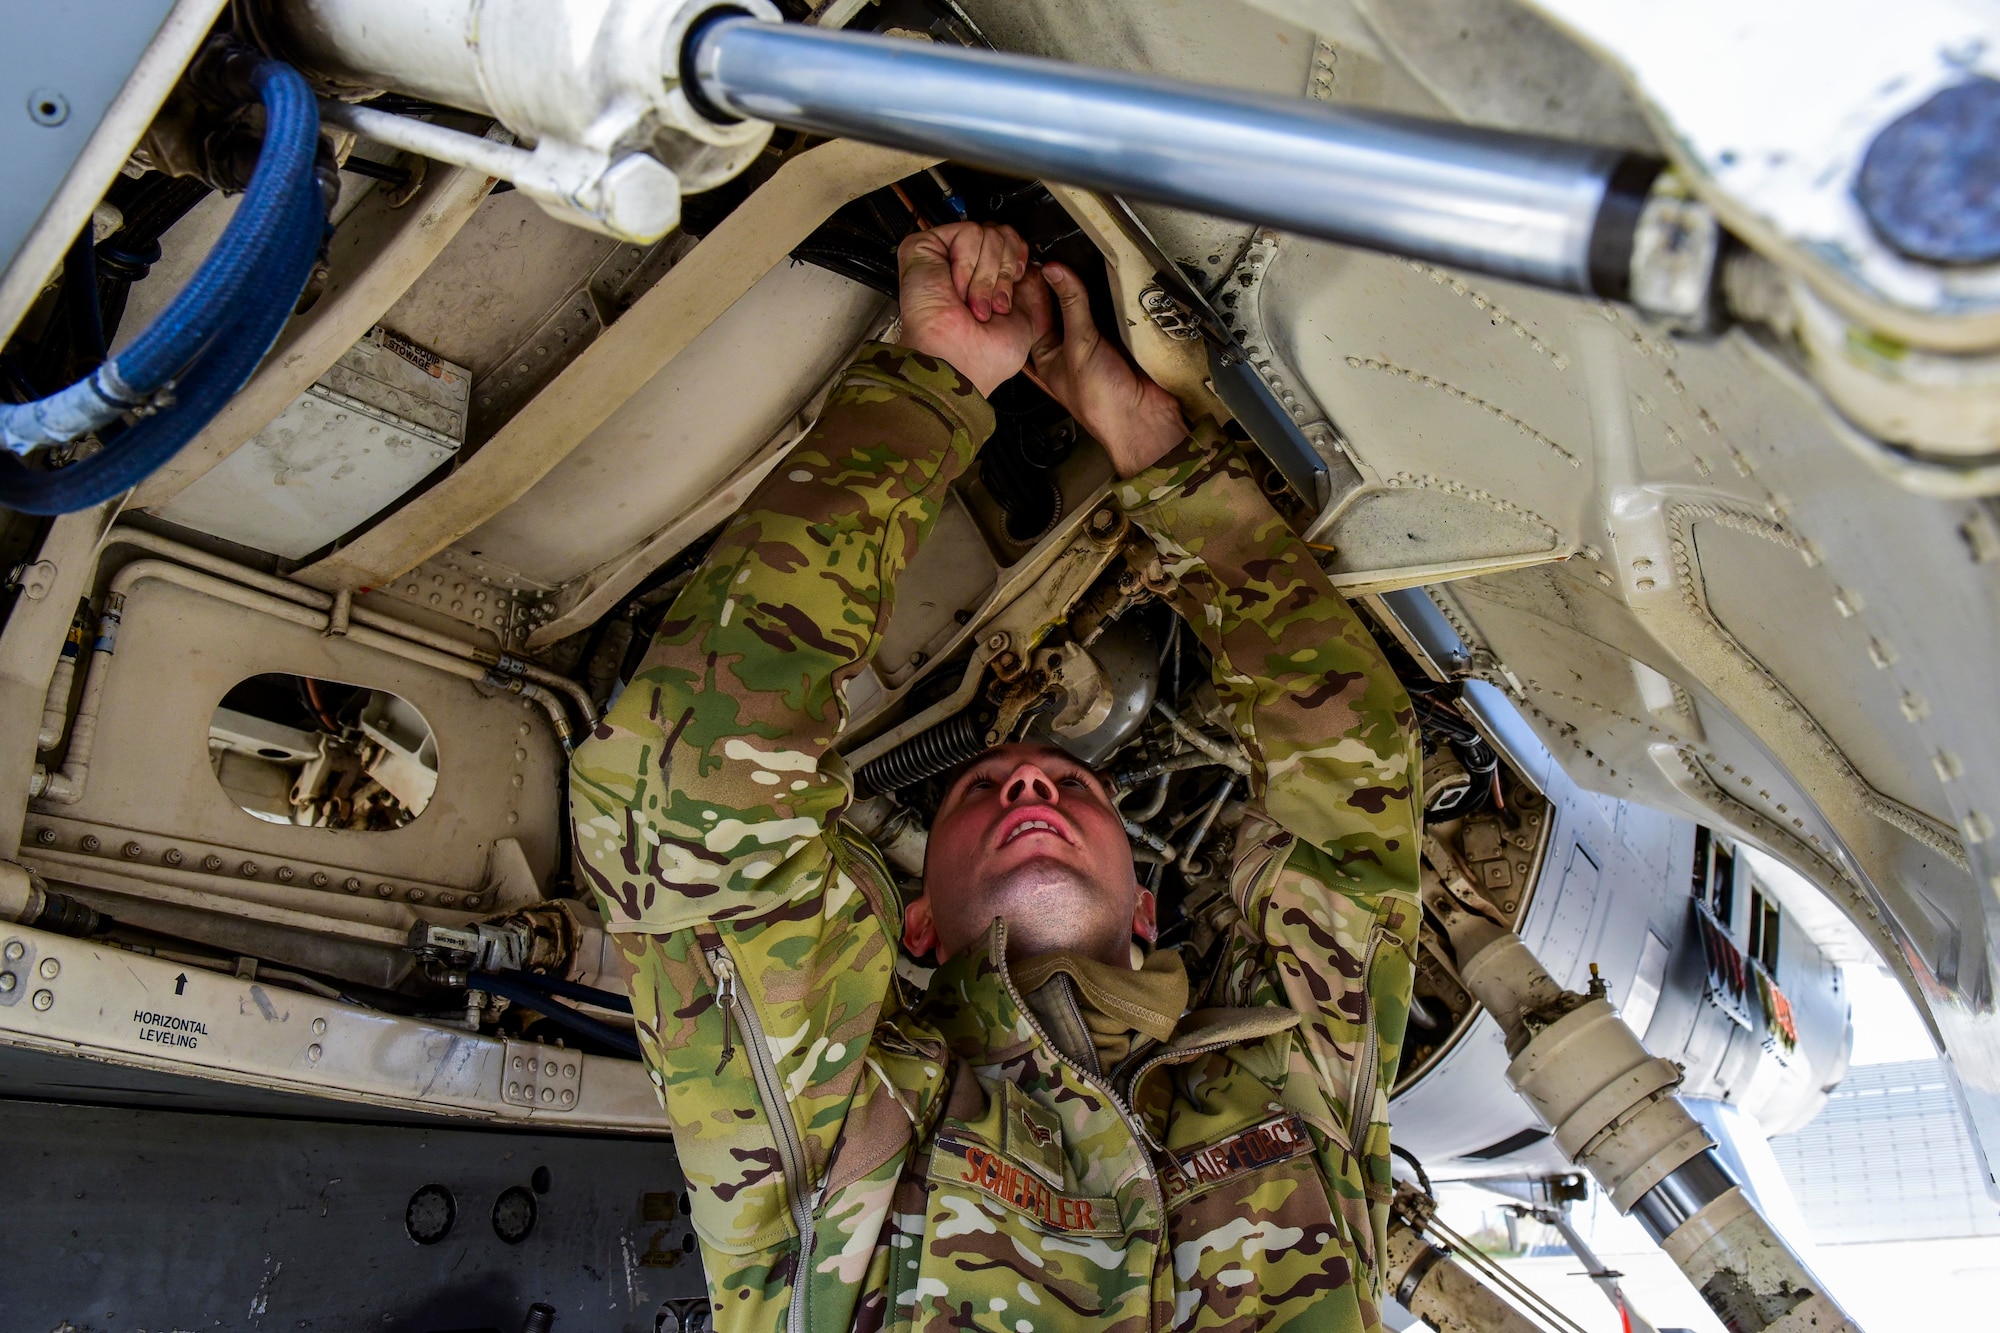 An Airman tightens a bolt.